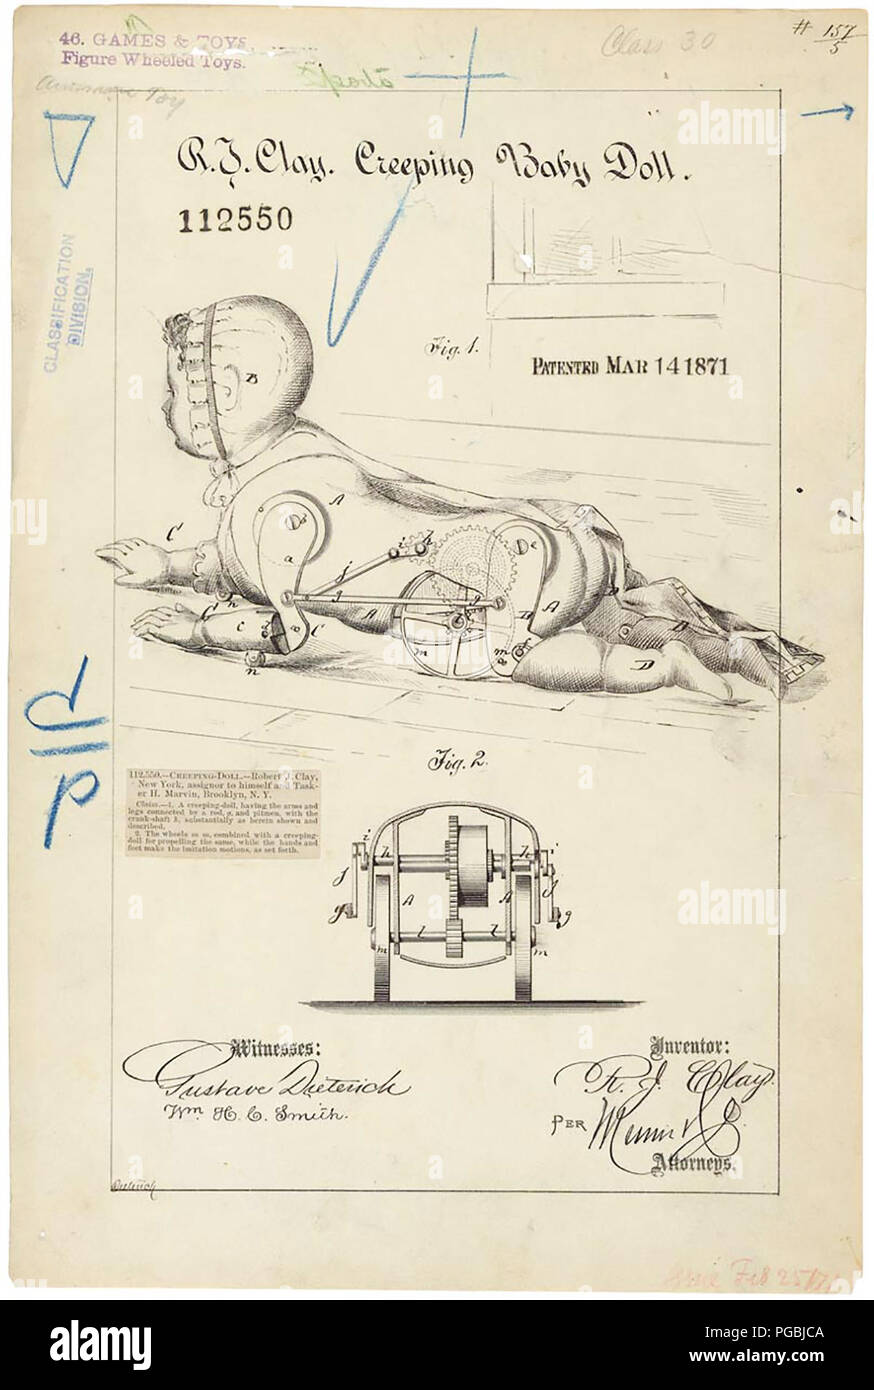 R. J. argilla, Creeping Baby Doll, brevettata 14 Marzo 1871 Foto Stock